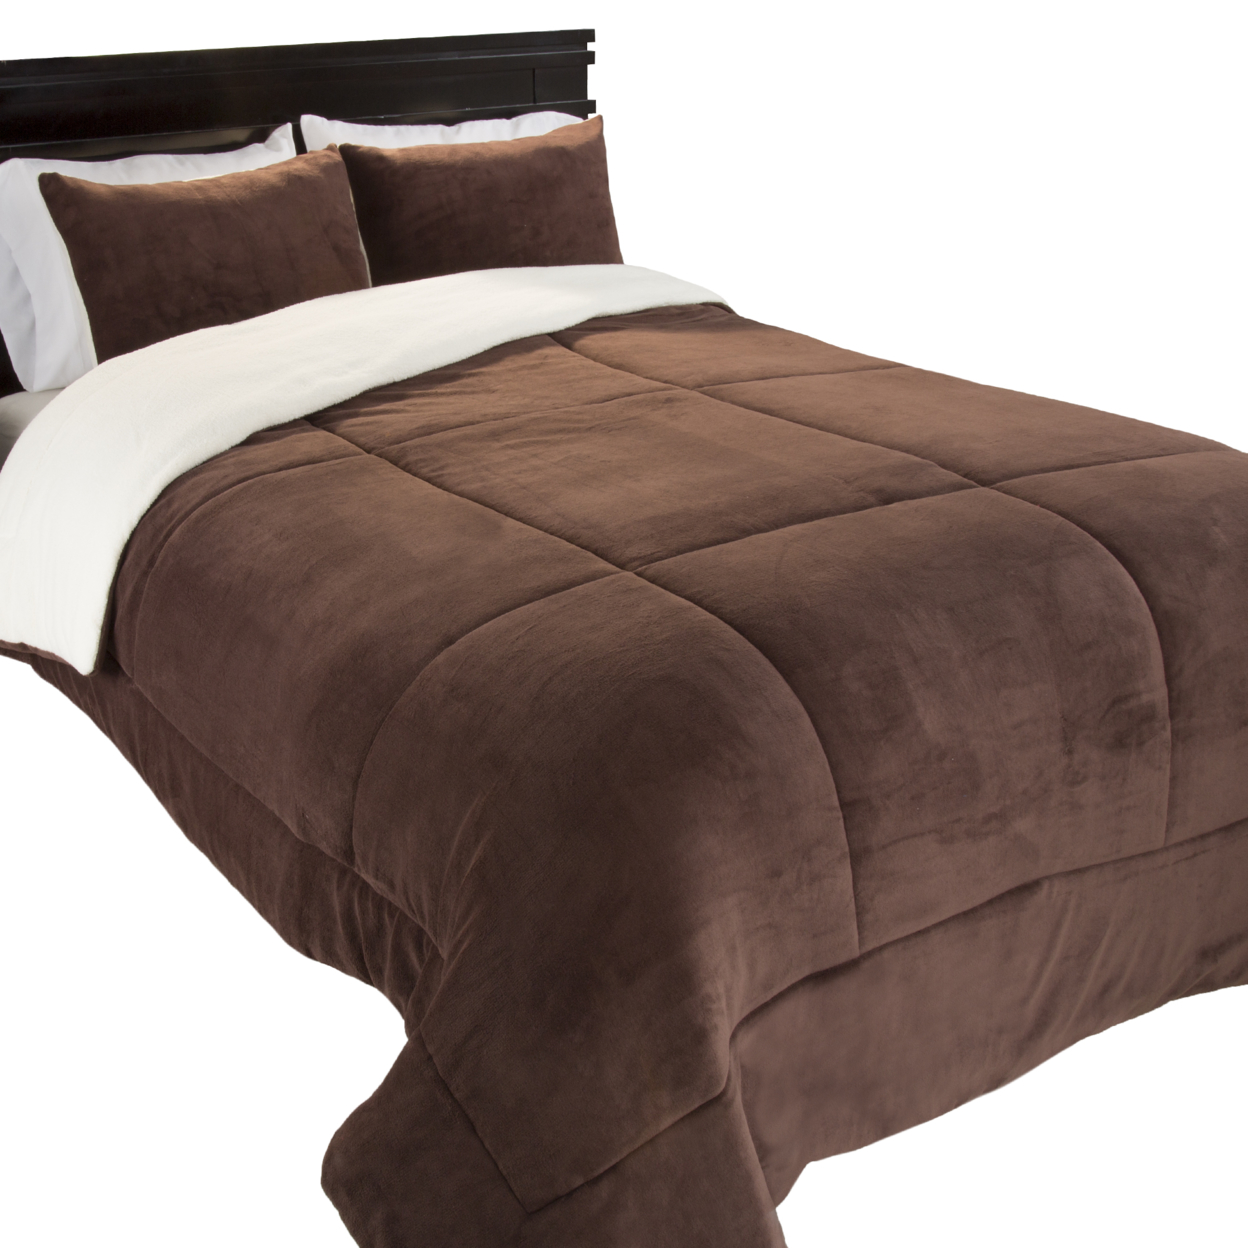 Lavish Home 3 Piece Sherpa/Fleece Comforter Set - King - Chocolate